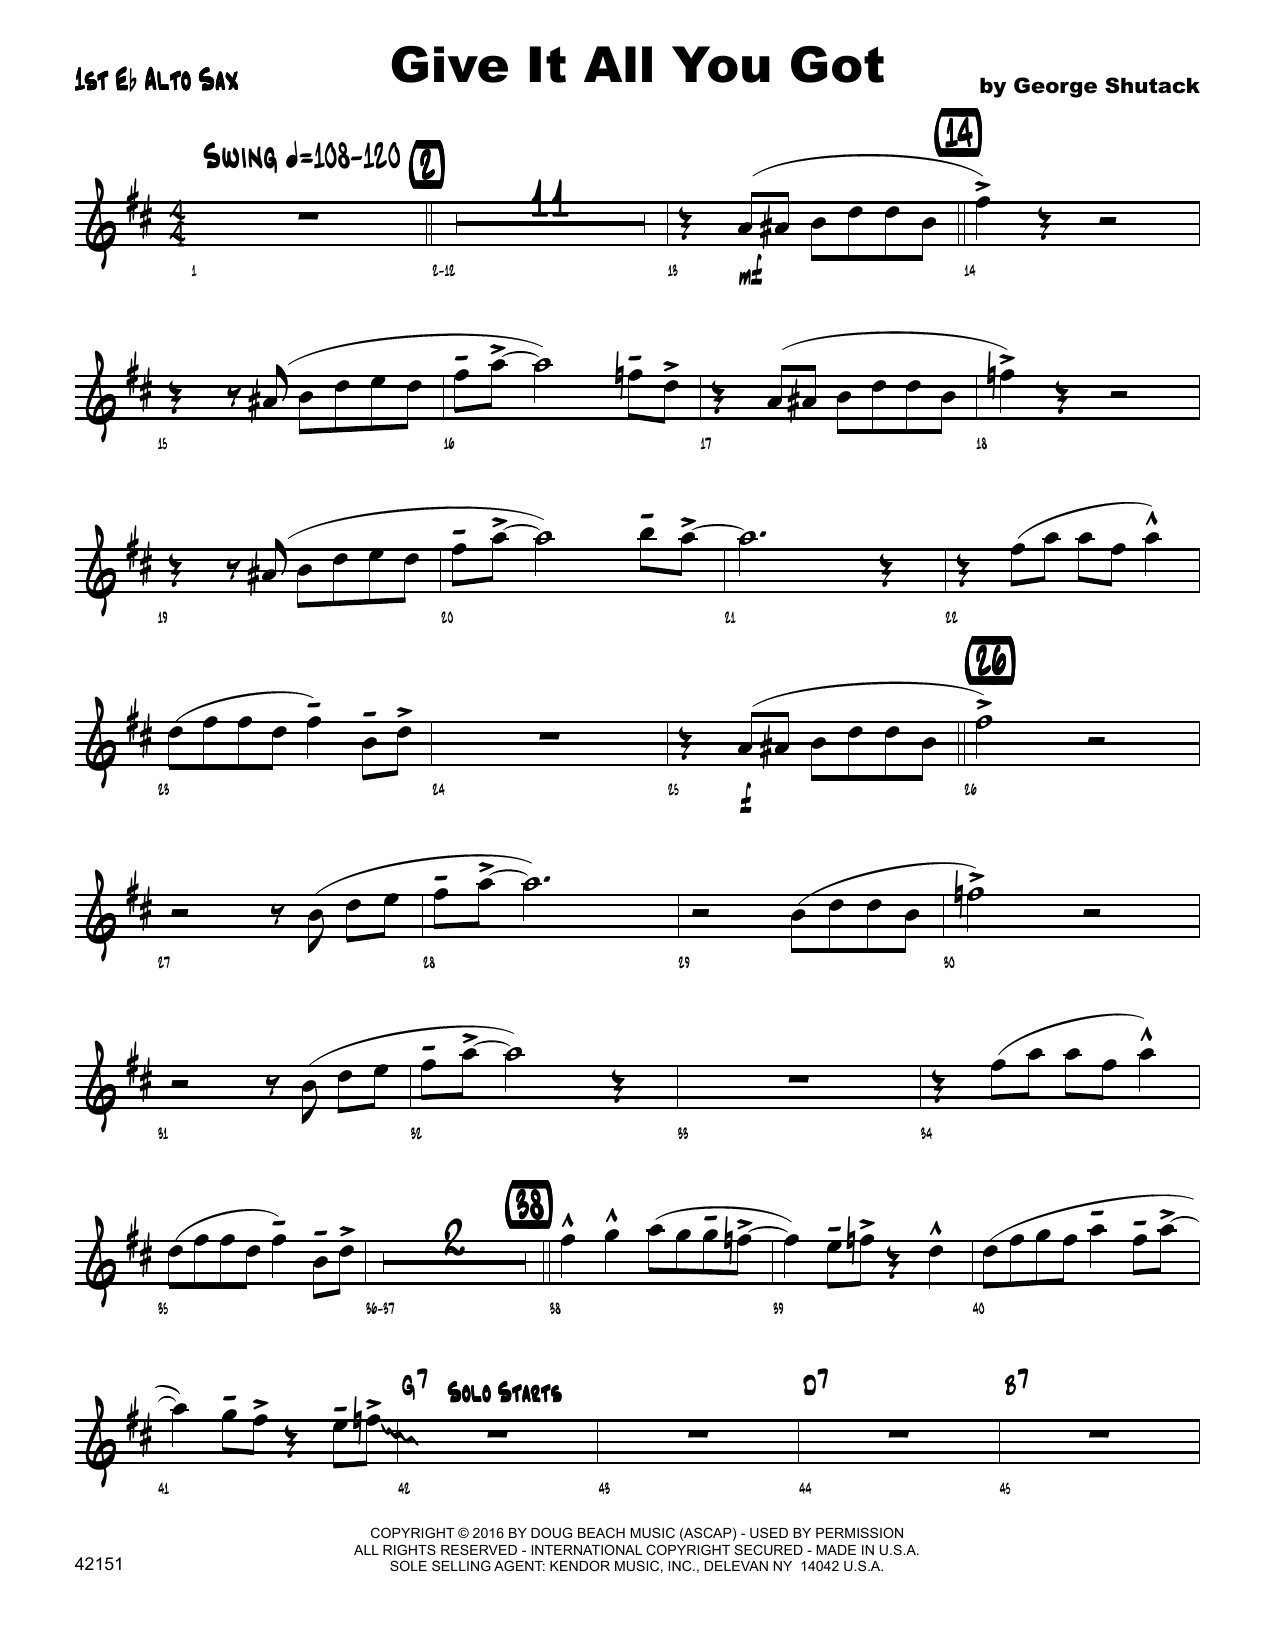 Download George Shutack Give It All You Got - 1st Eb Alto Saxop Sheet Music